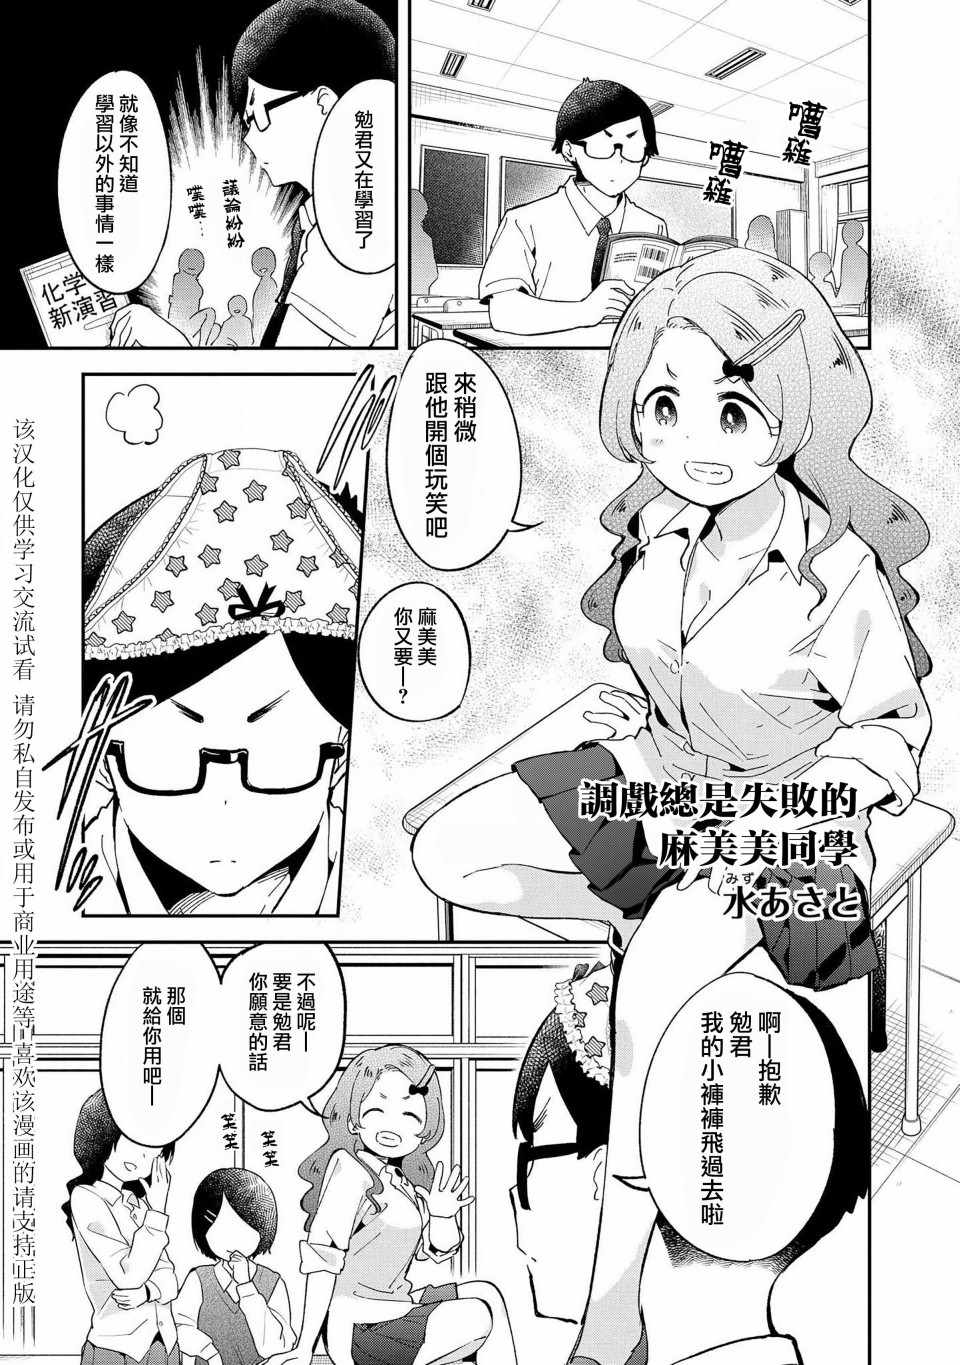 《4P恋爱小短篇》漫画 020集